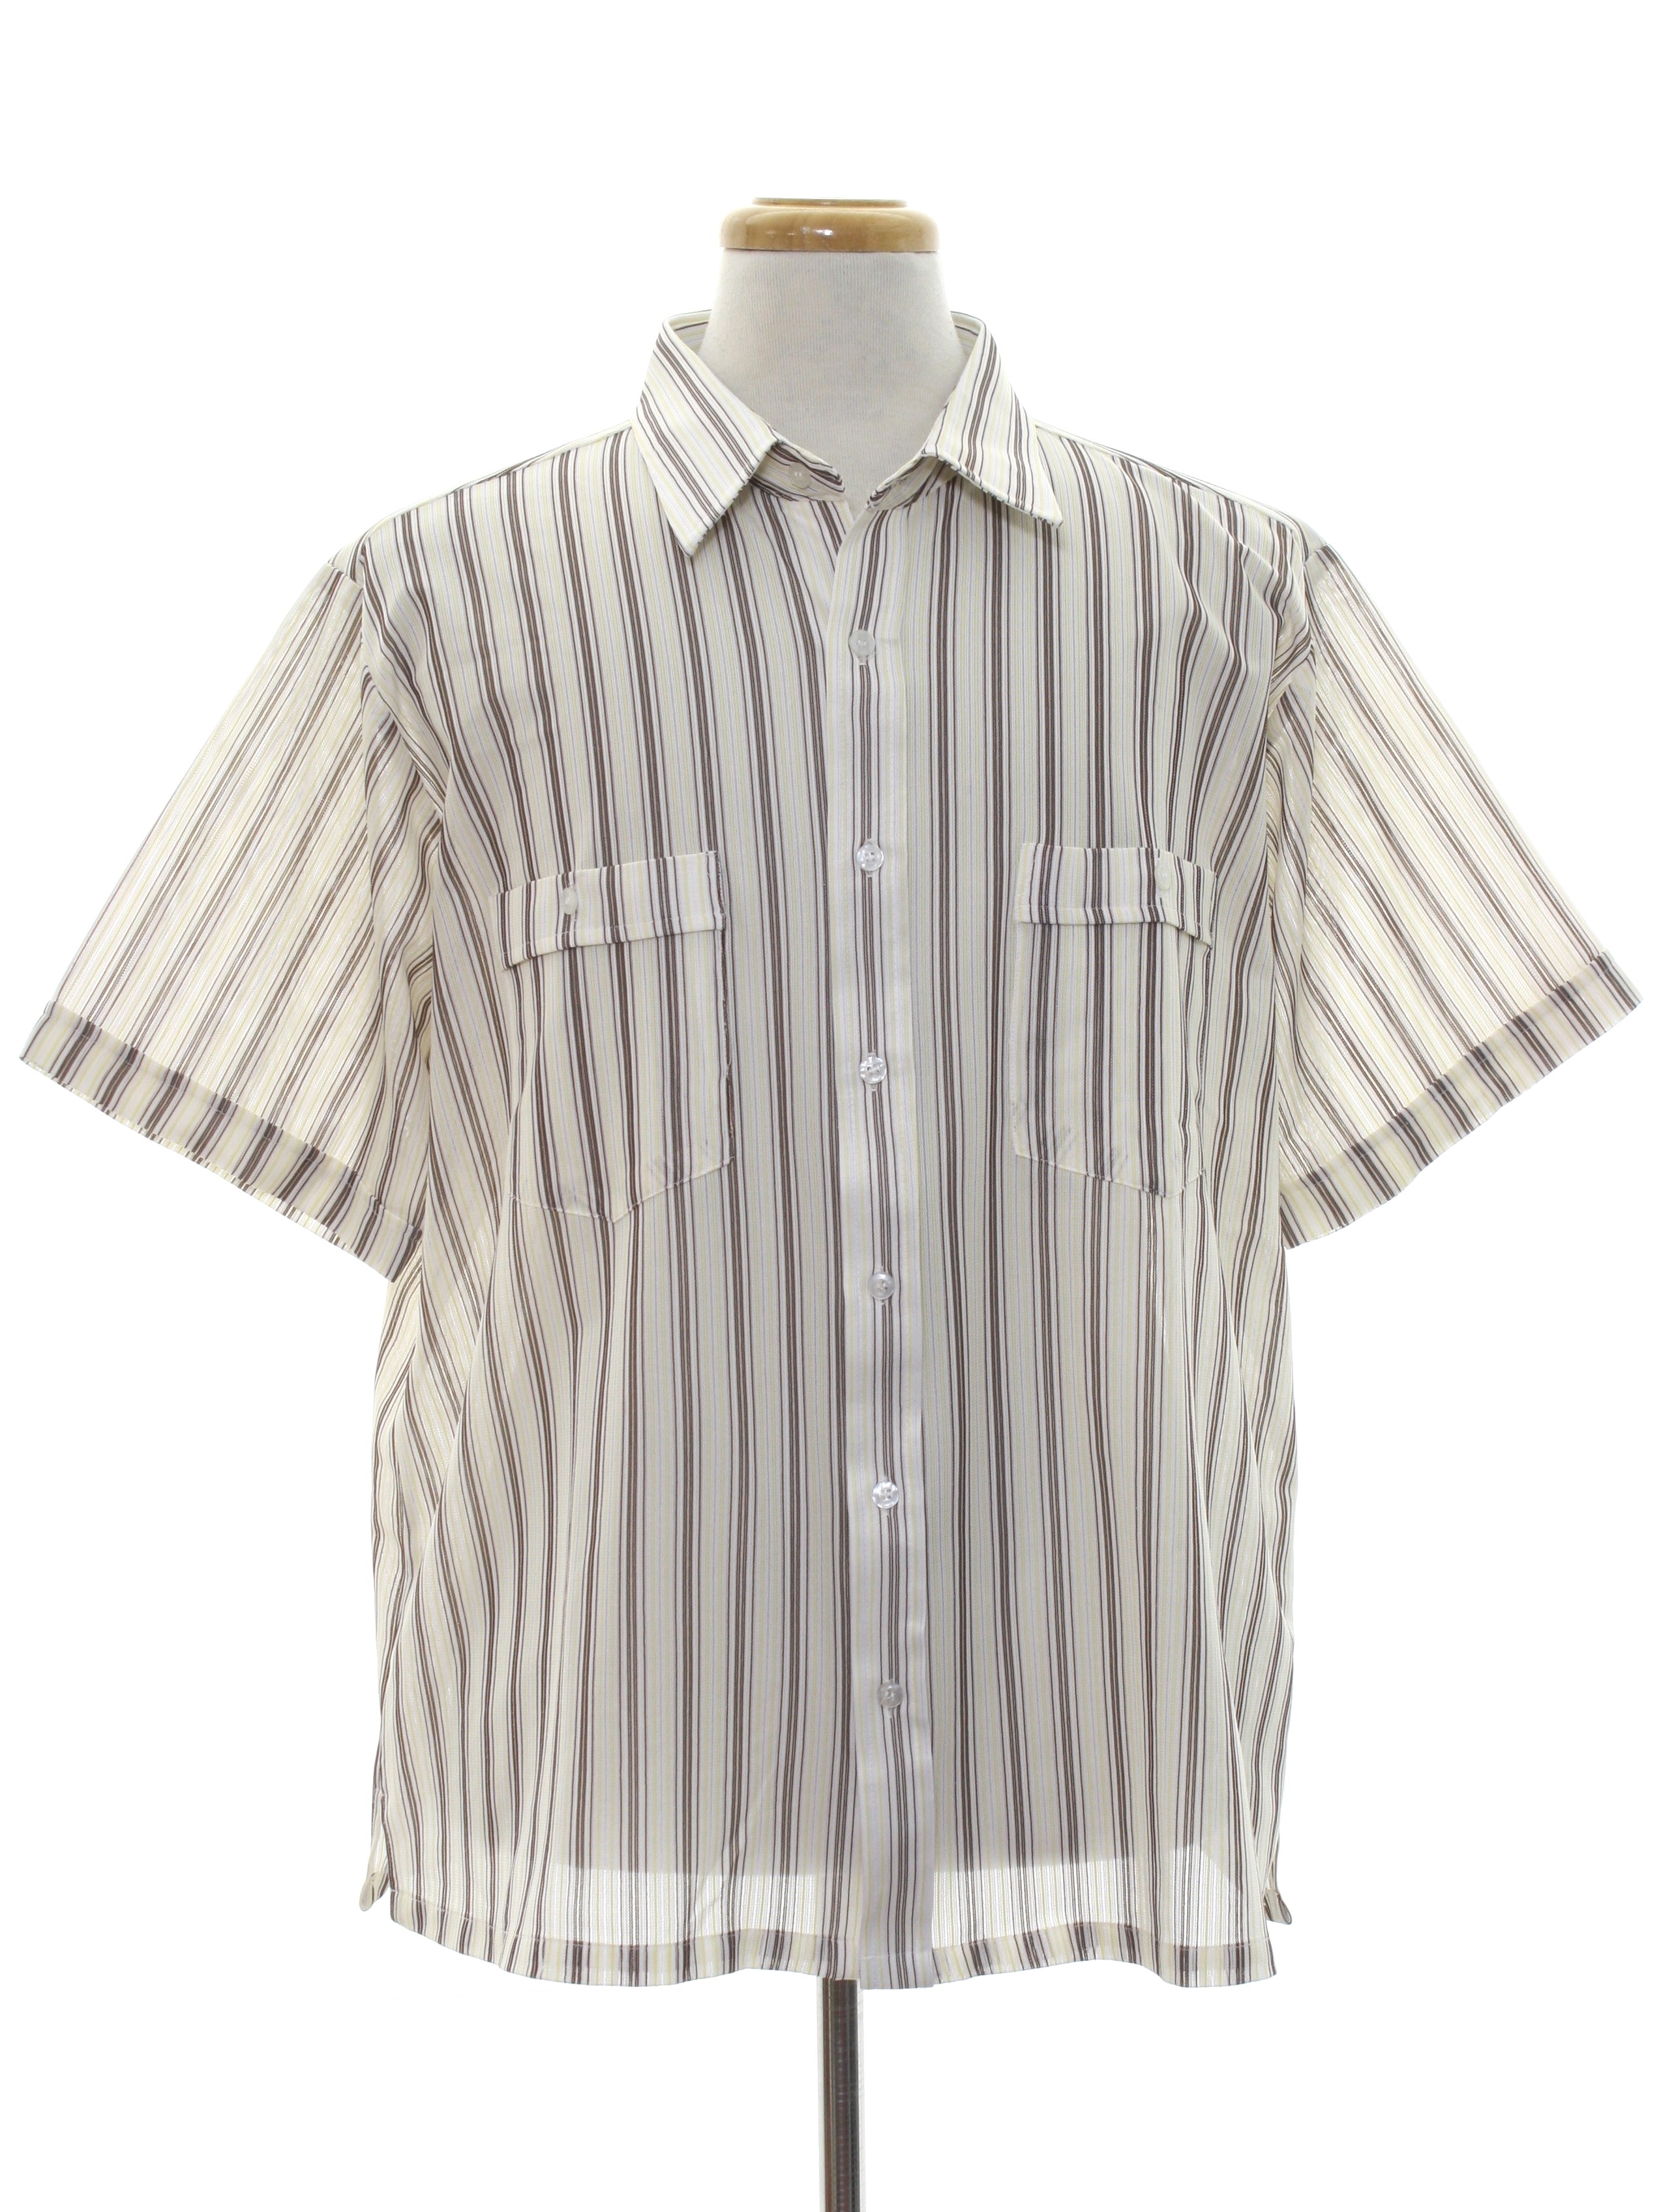 Retro 90s Shirt (Haband) : 90s or Newer -Haband- Mens white background ...